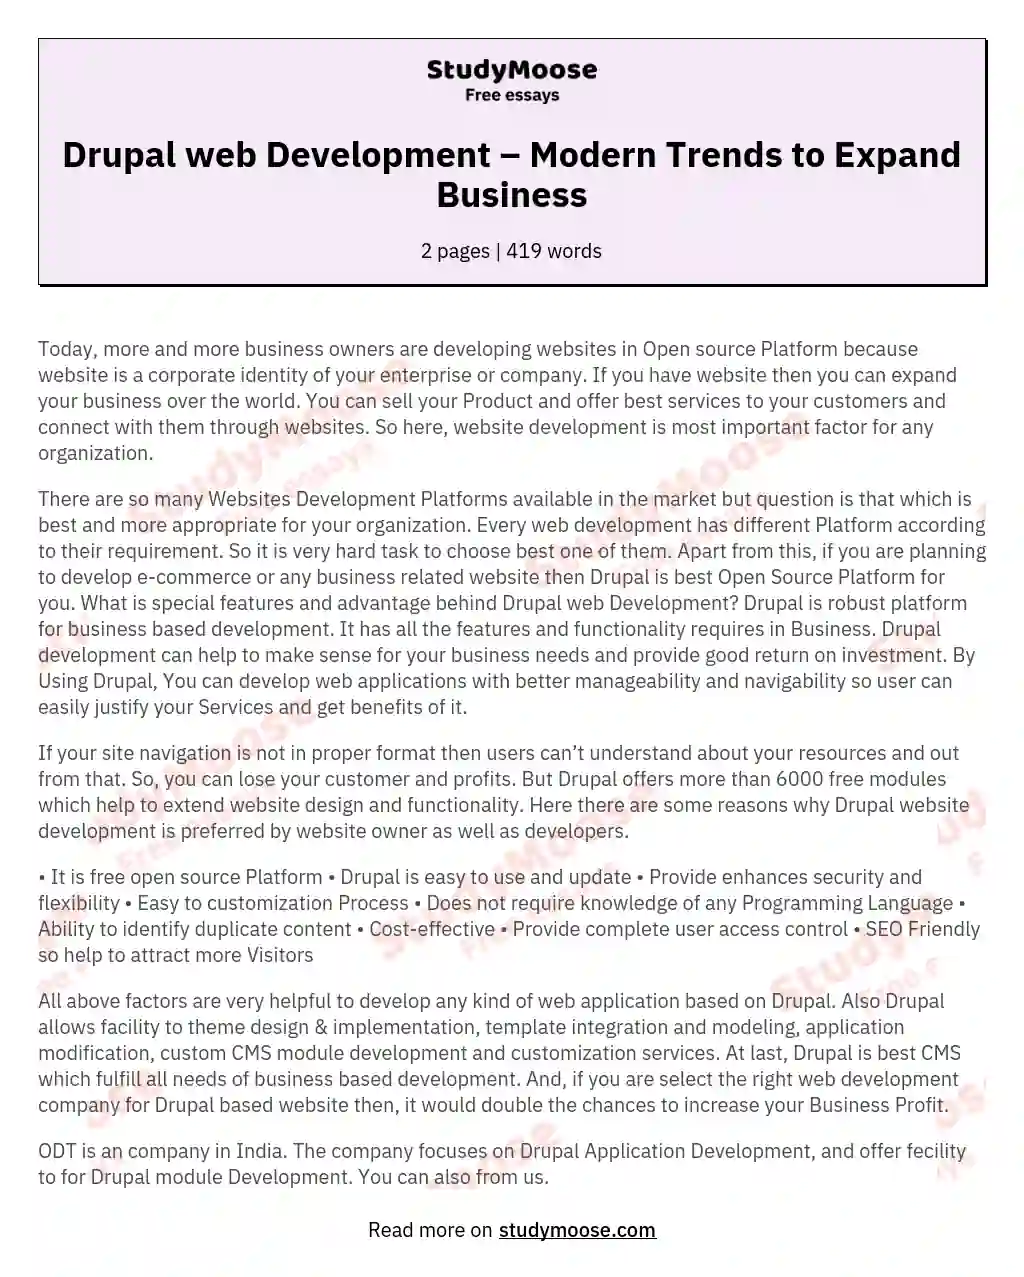 Drupal web Development – Modern Trends to Expand Business essay